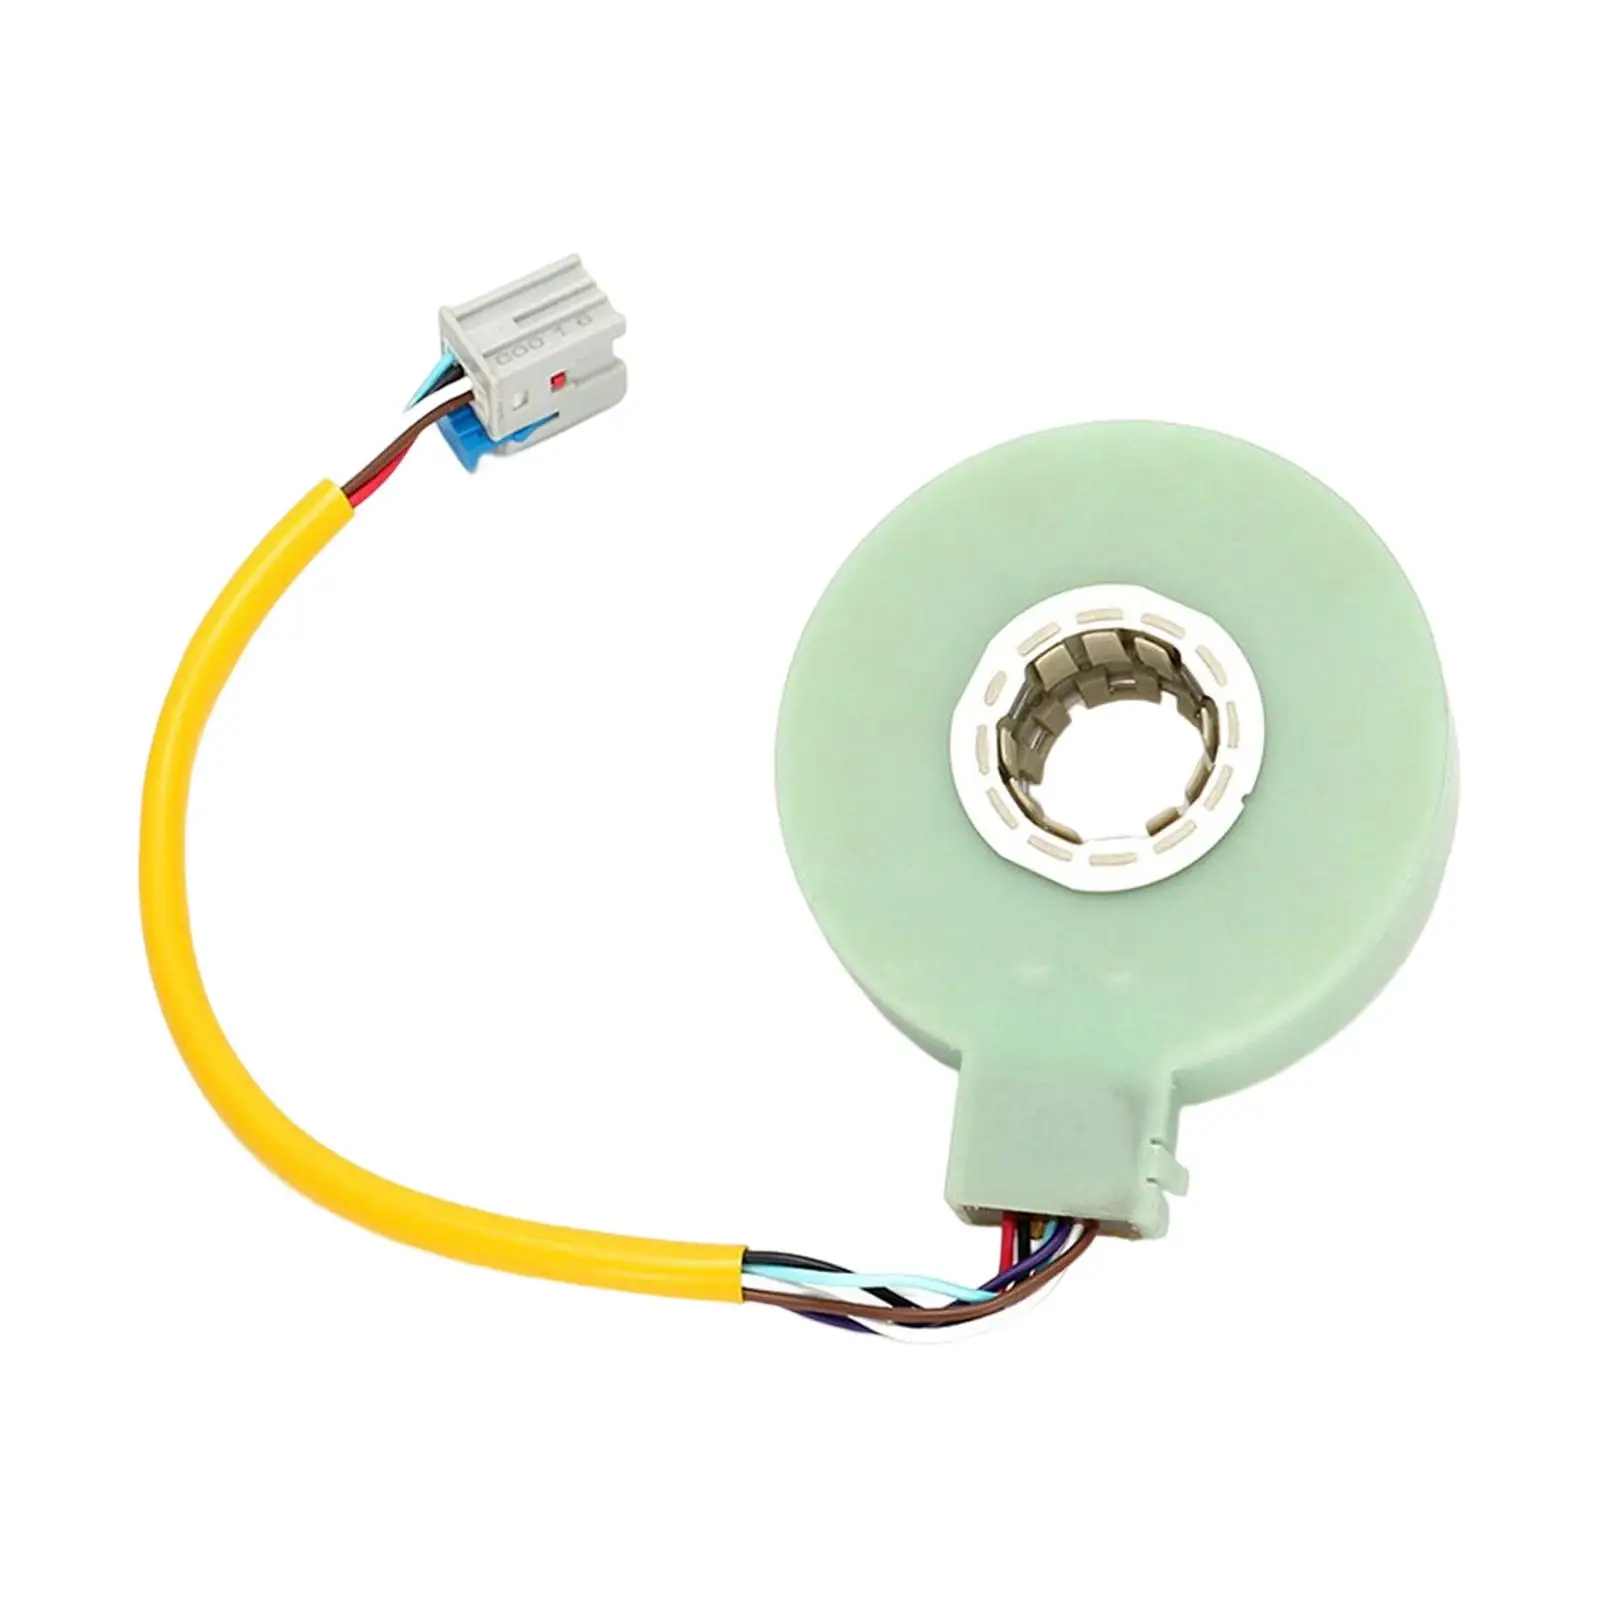 Steering Angle Sensor Replaces Zfa188 Spare Parts 51826525 55701321 for Fiat PUNTO C1005 C1006 Lenkwinkelsensor C5005 C5006